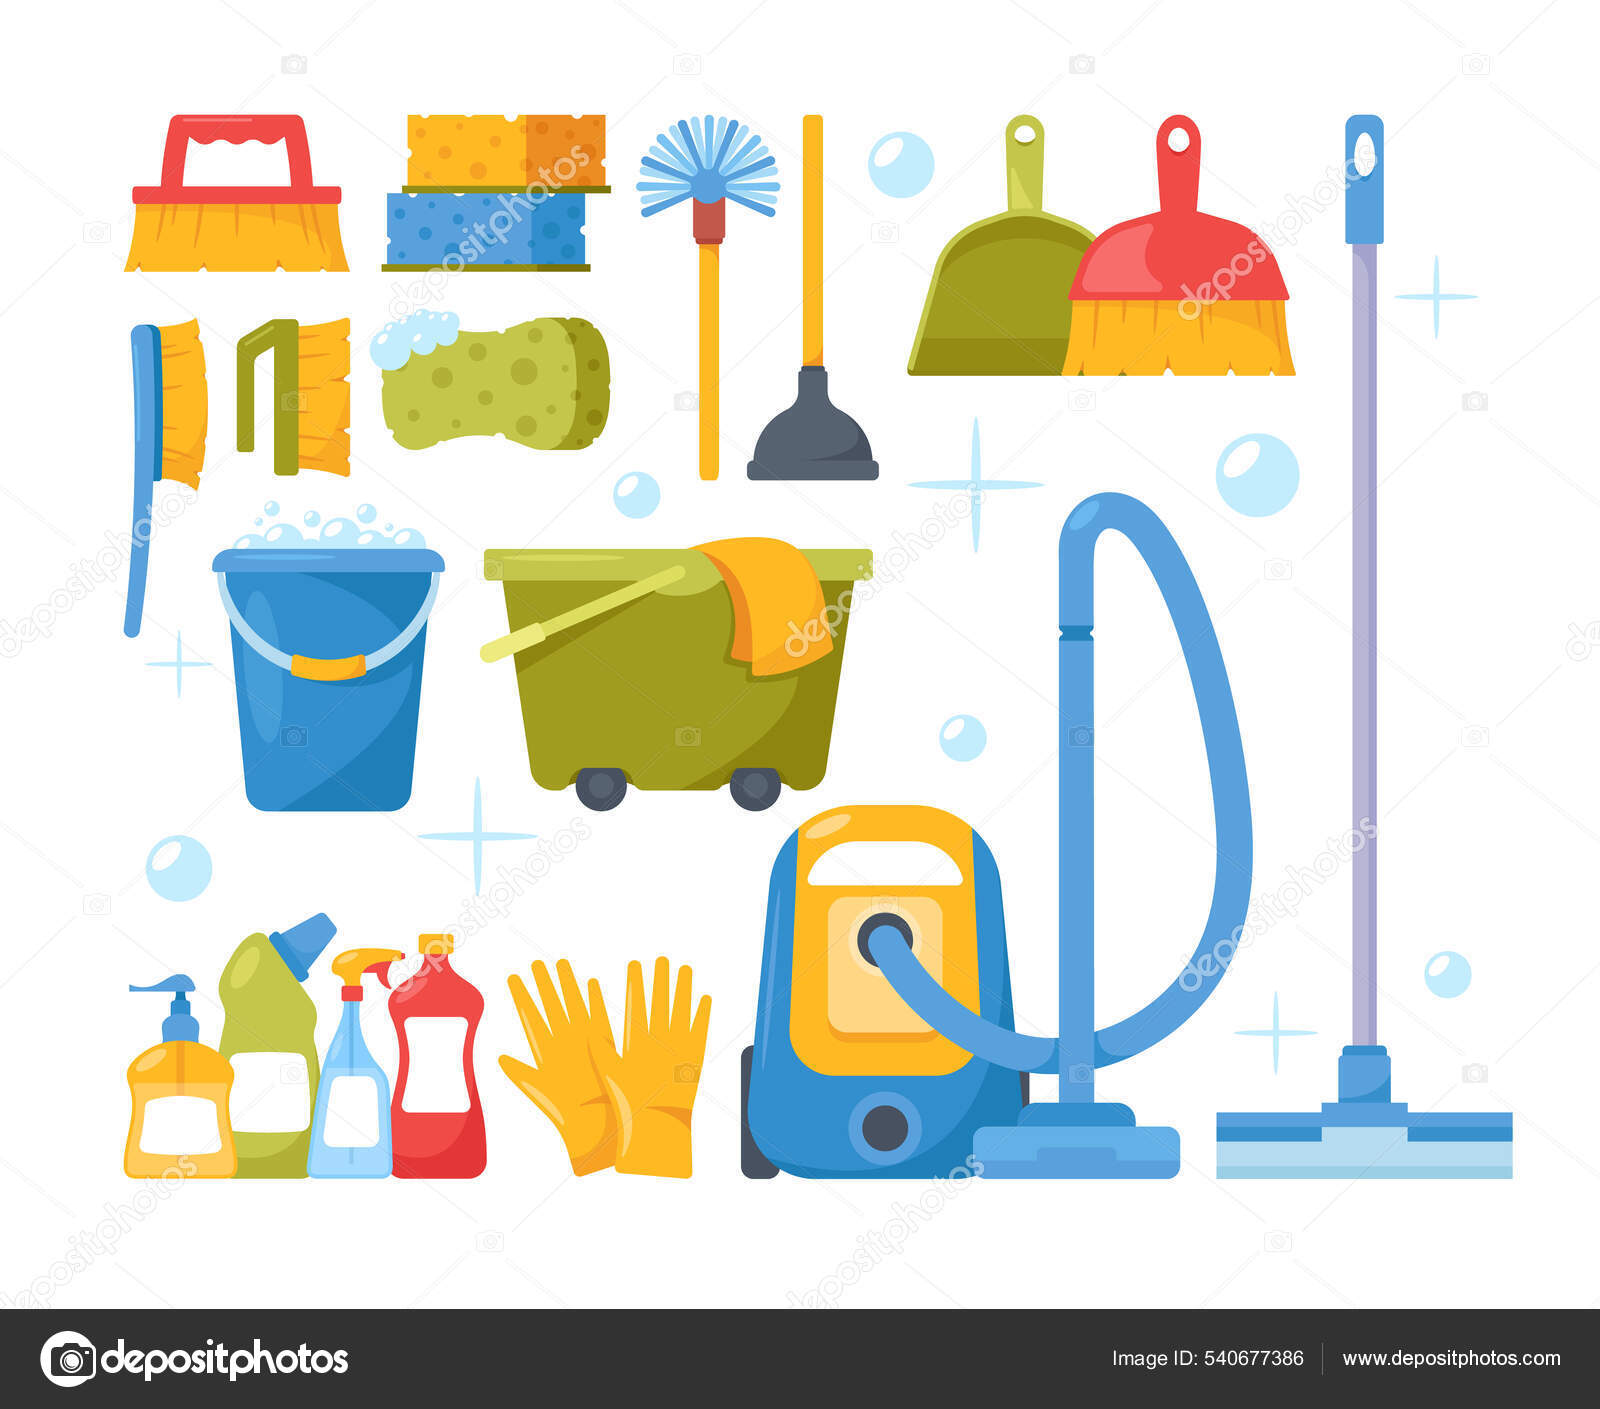 https://st.depositphotos.com/6464944/54067/v/1600/depositphotos_540677386-stock-illustration-set-of-cleaning-service-equipment.jpg